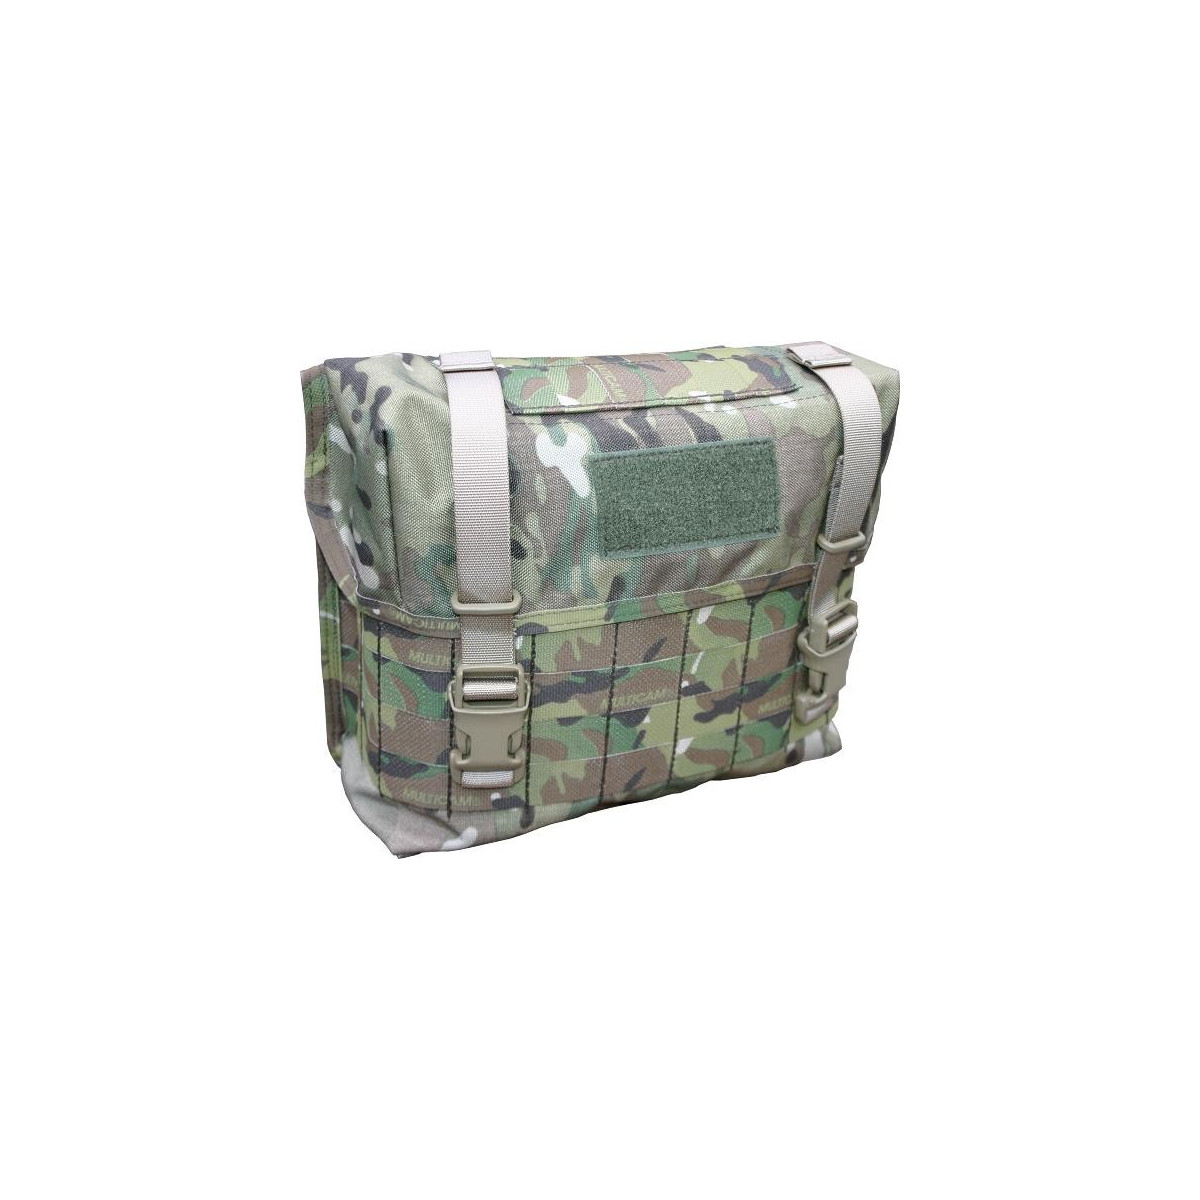 7 liter MOLLE multi-purpose bag for backpacks and battle belt